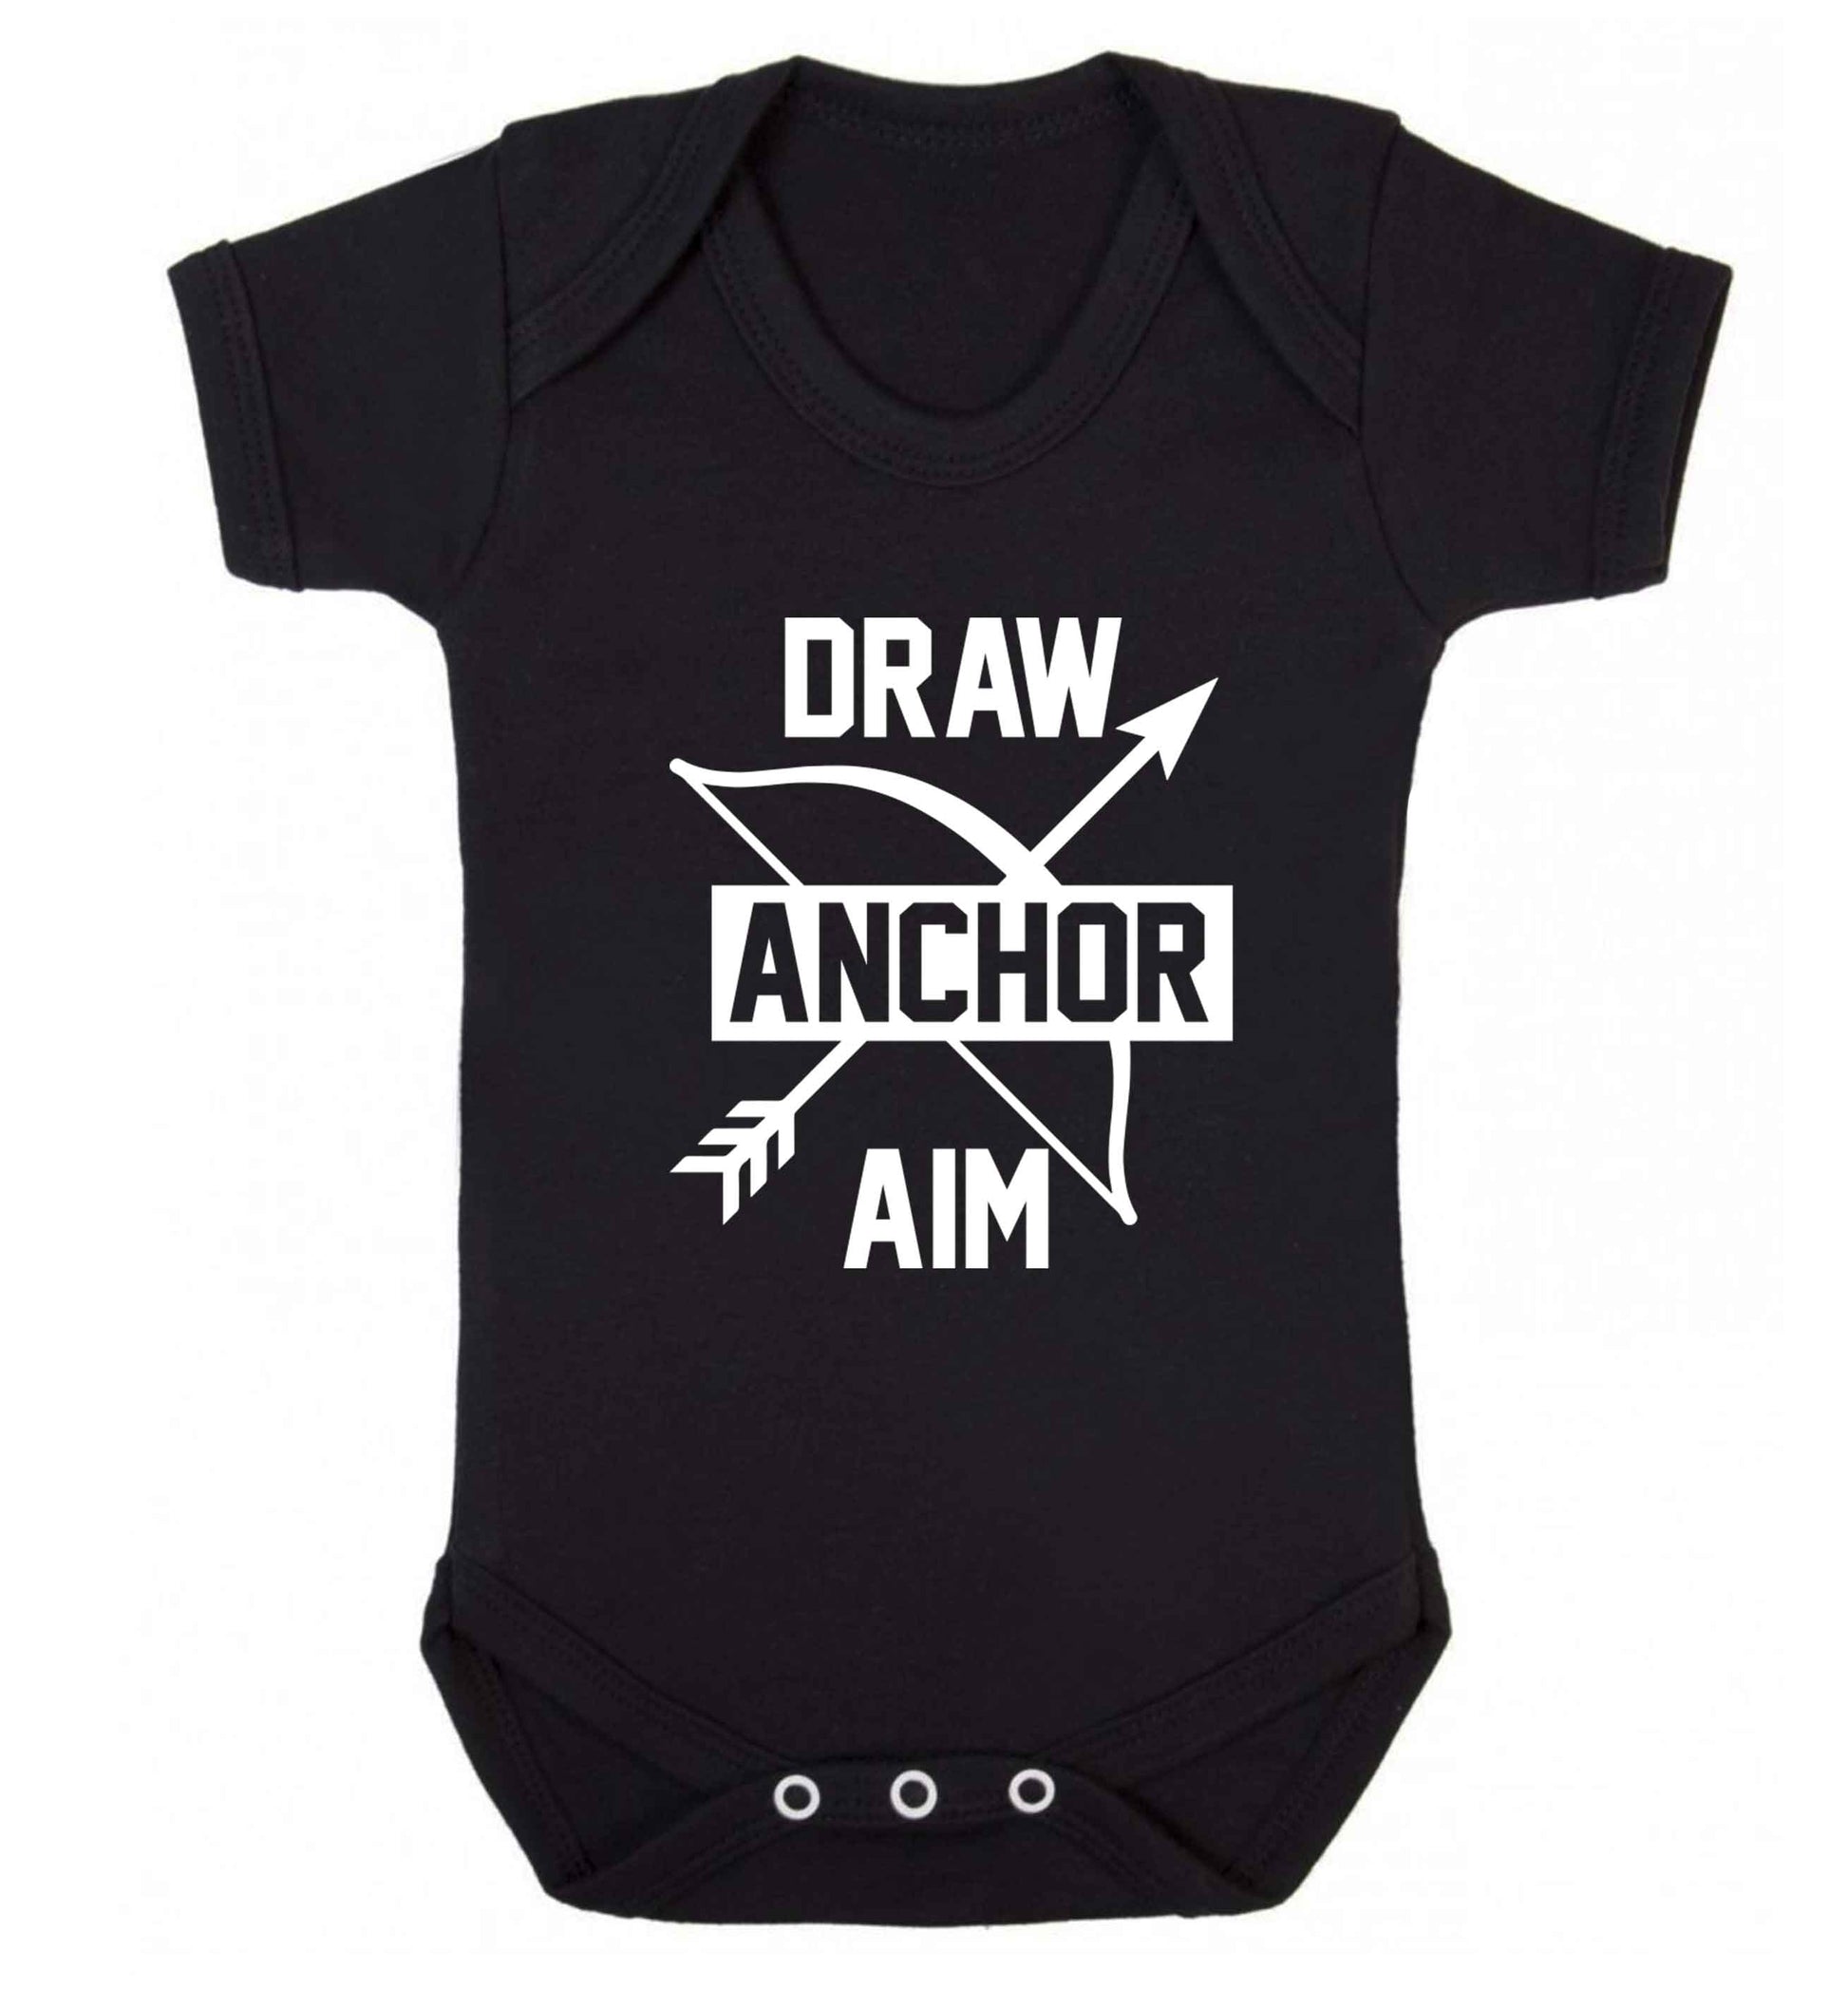 Draw anchor aim Baby Vest black 18-24 months